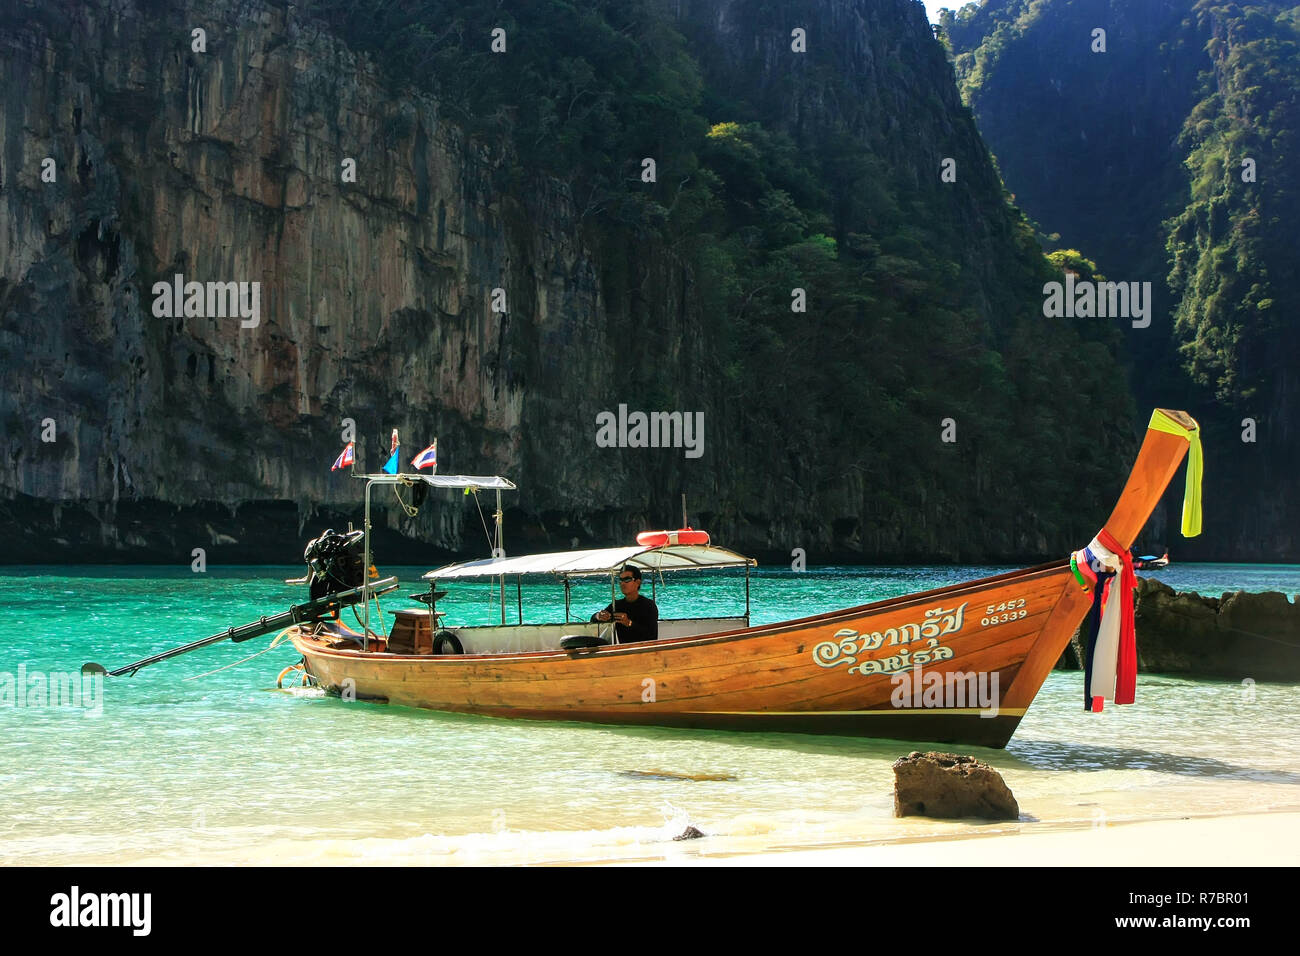 Longtailboot durch die einsamen Strand auf der Insel Phi Phi Leh verankert, Provinz Krabi, Thailand. Koh Phi Phi Leh ist Teil der Mu Ko Phi Phi Nationalpark. Stockfoto